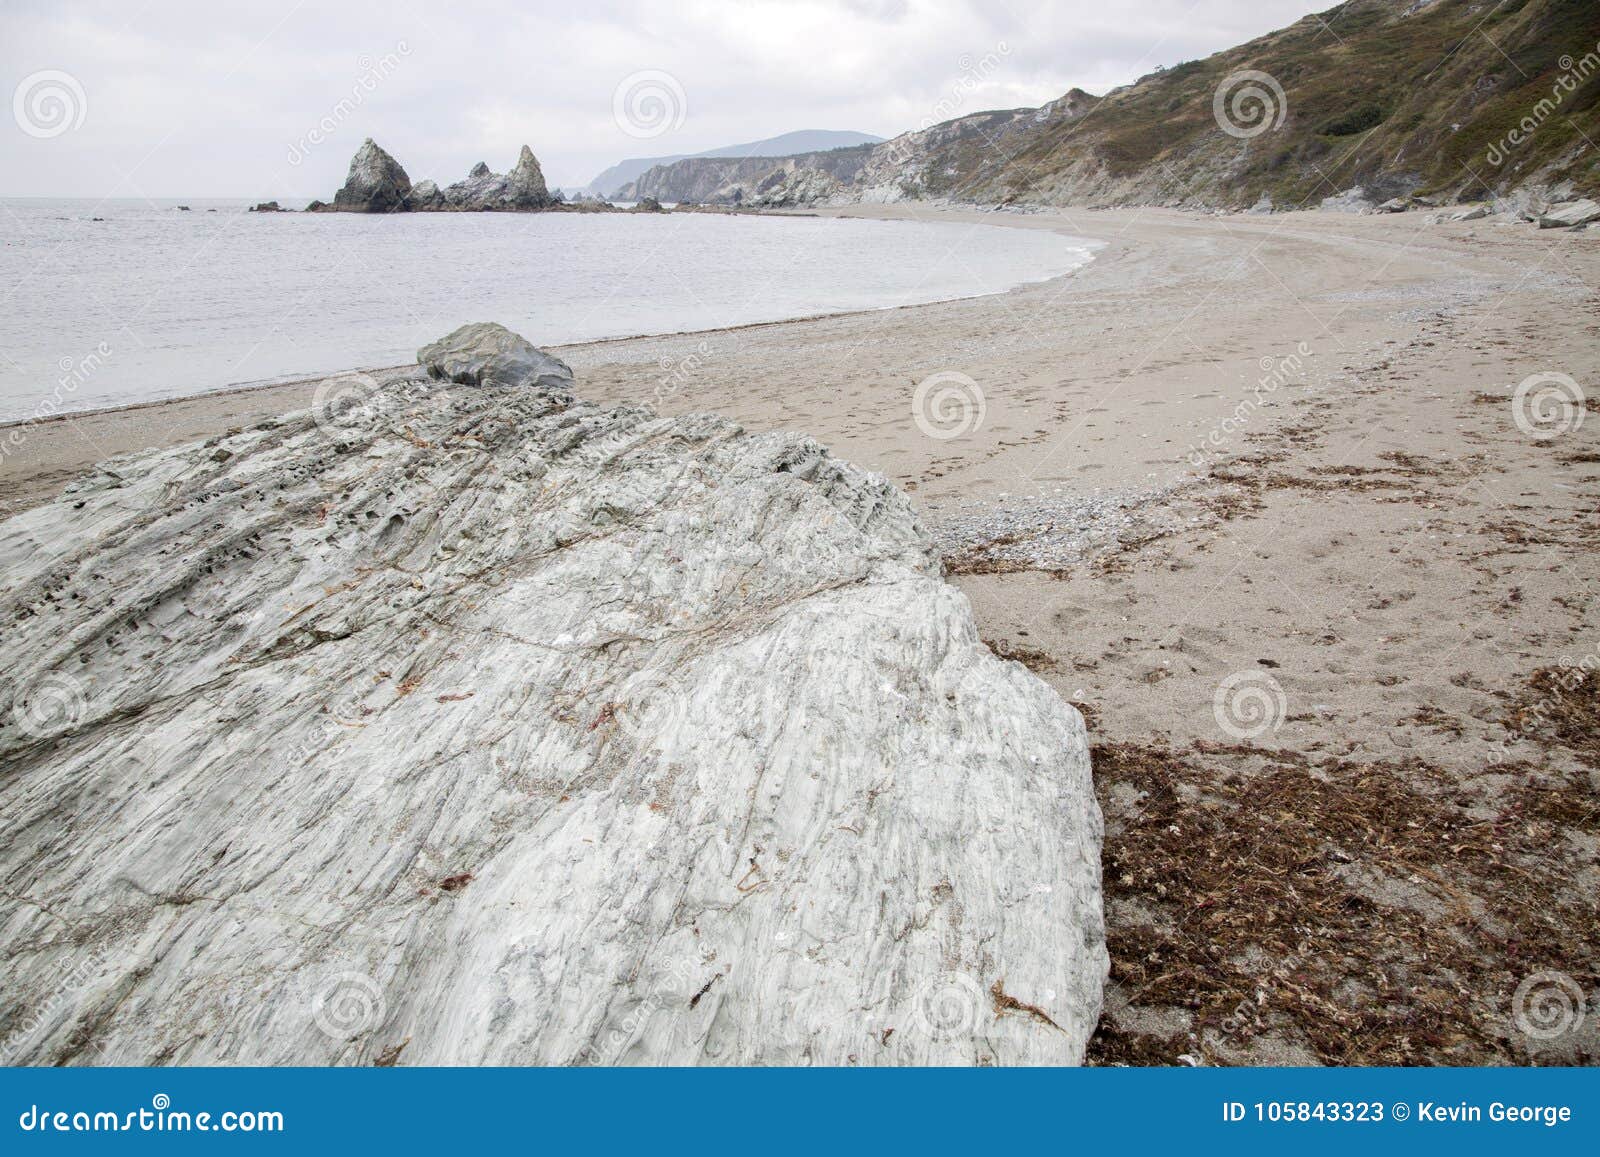 stone on carro beach; galicia